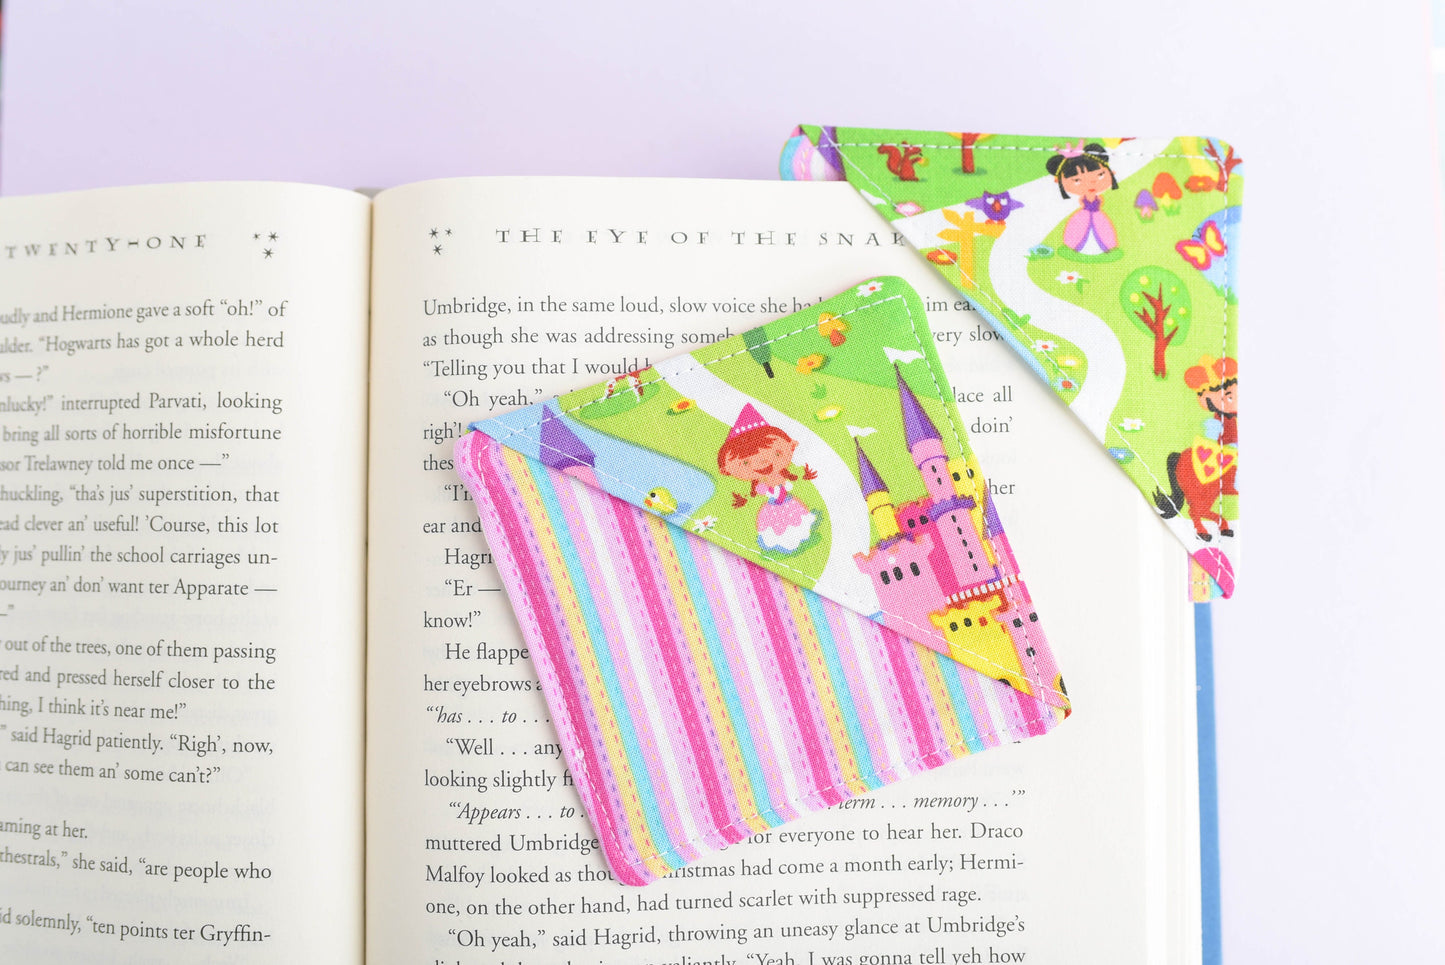 Pretty Princess & Rainbow Stripe Handmade Fabric Corner Bookmark